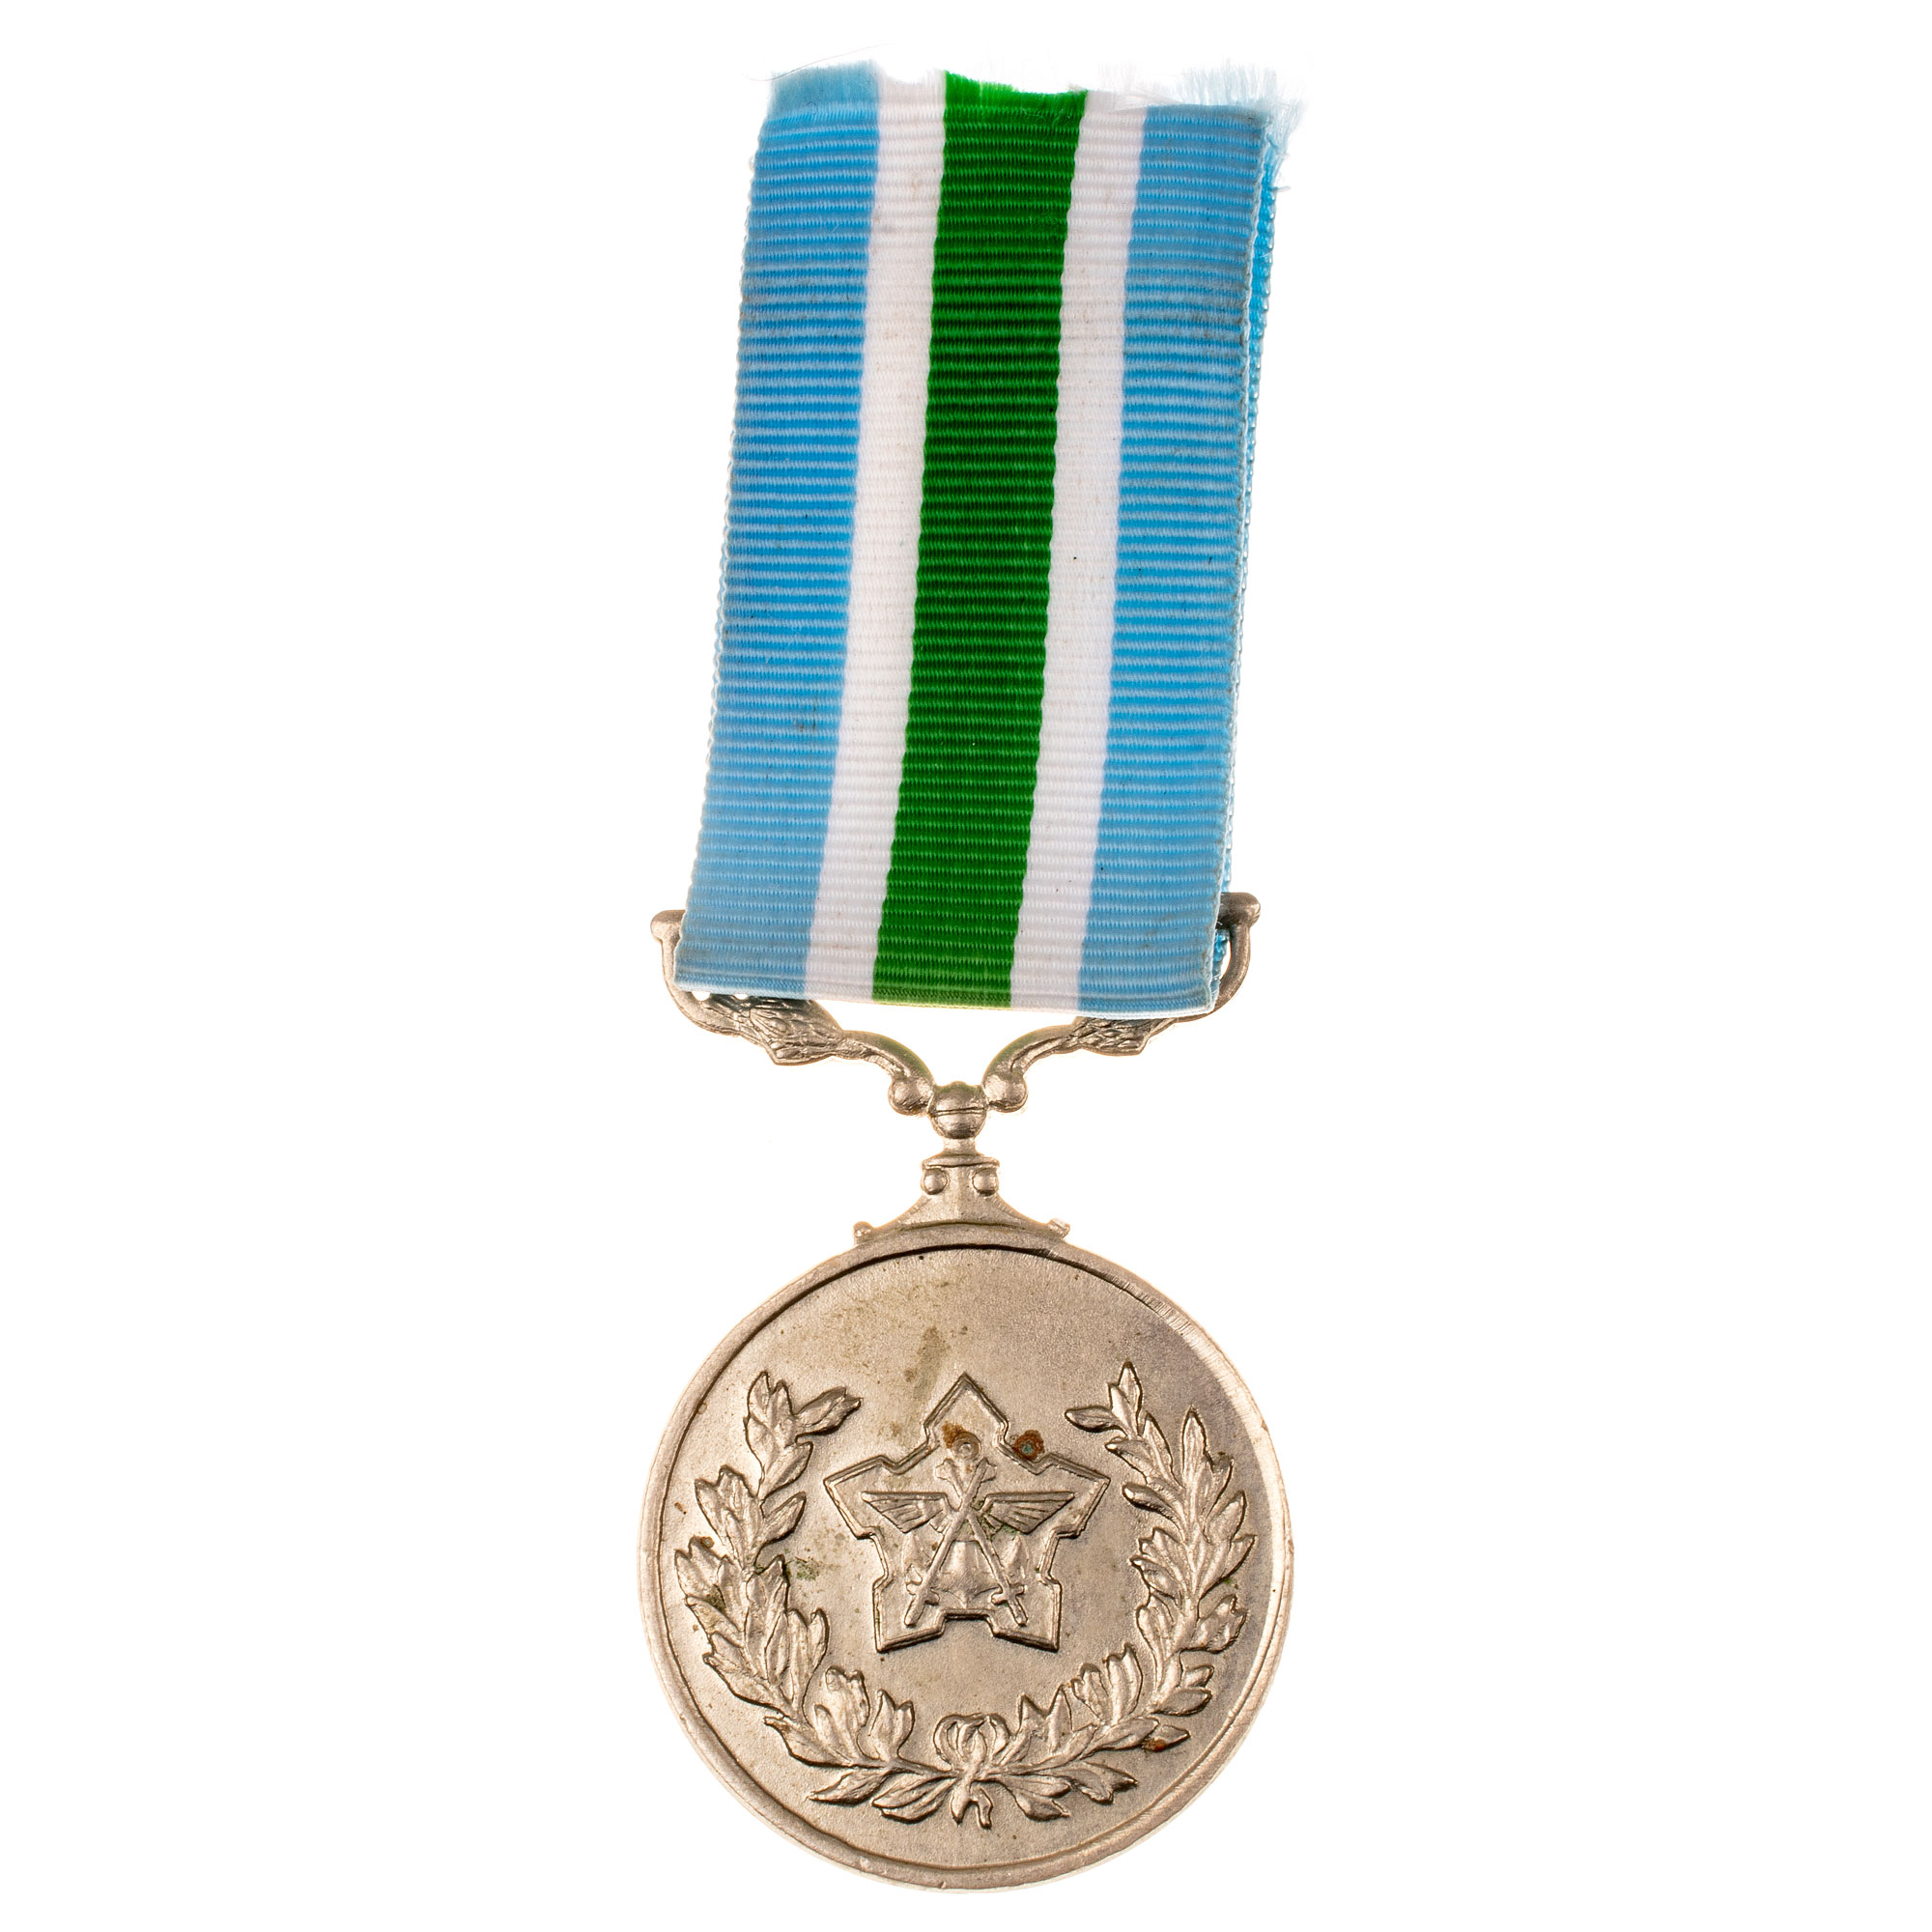 ЮАР. Медаль "За Заслуги" ("За Службу") № 179.627.